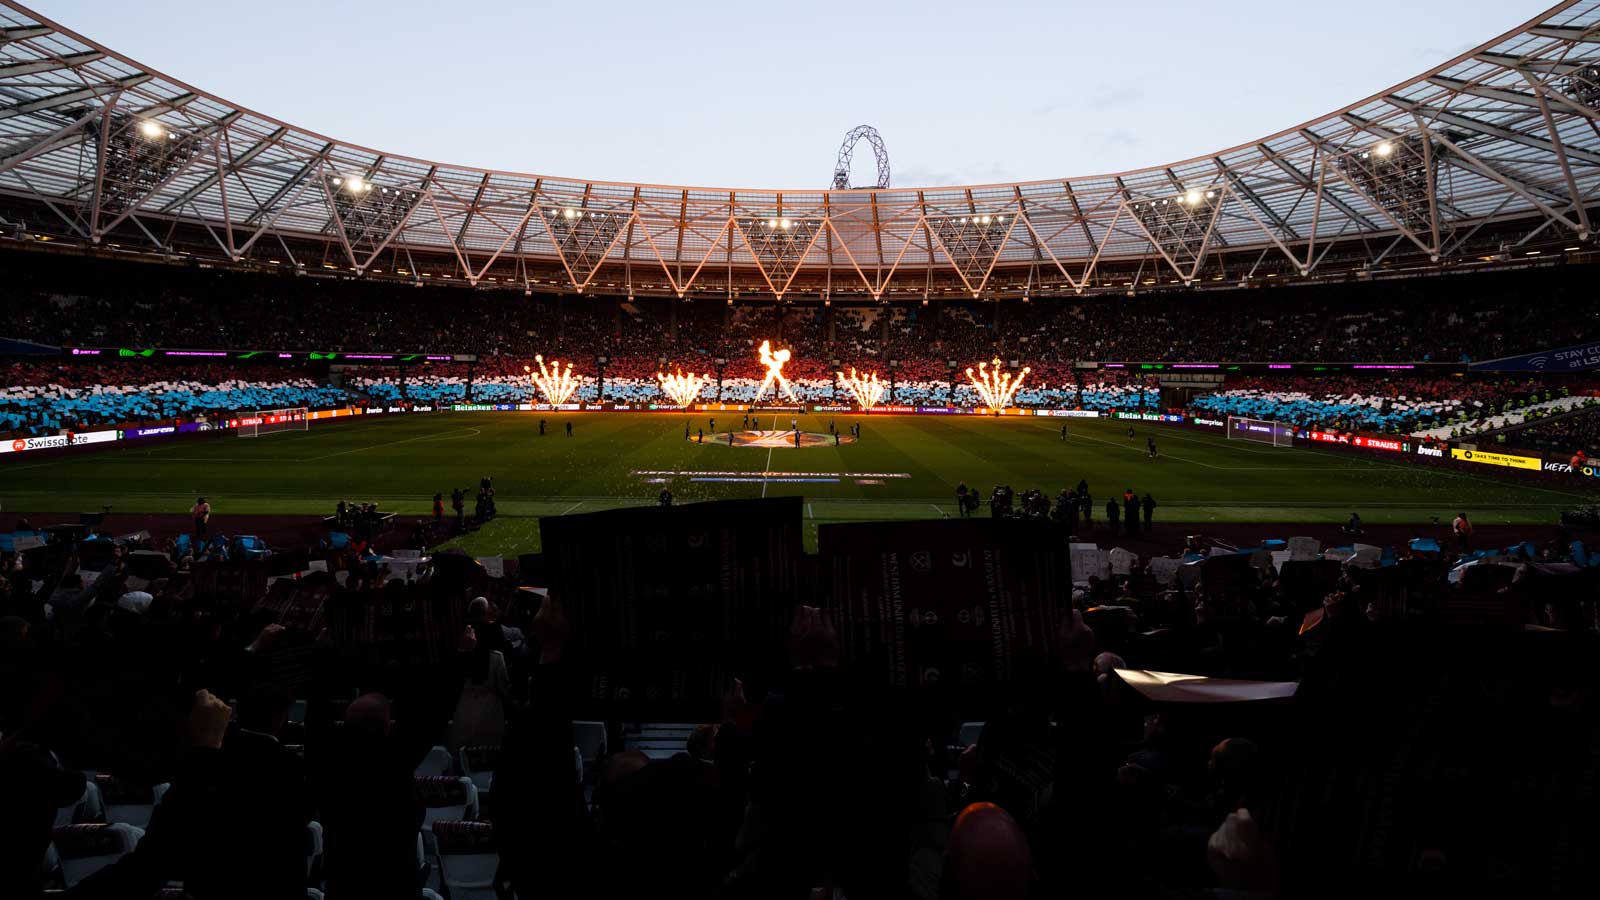 Light show at London Stadium